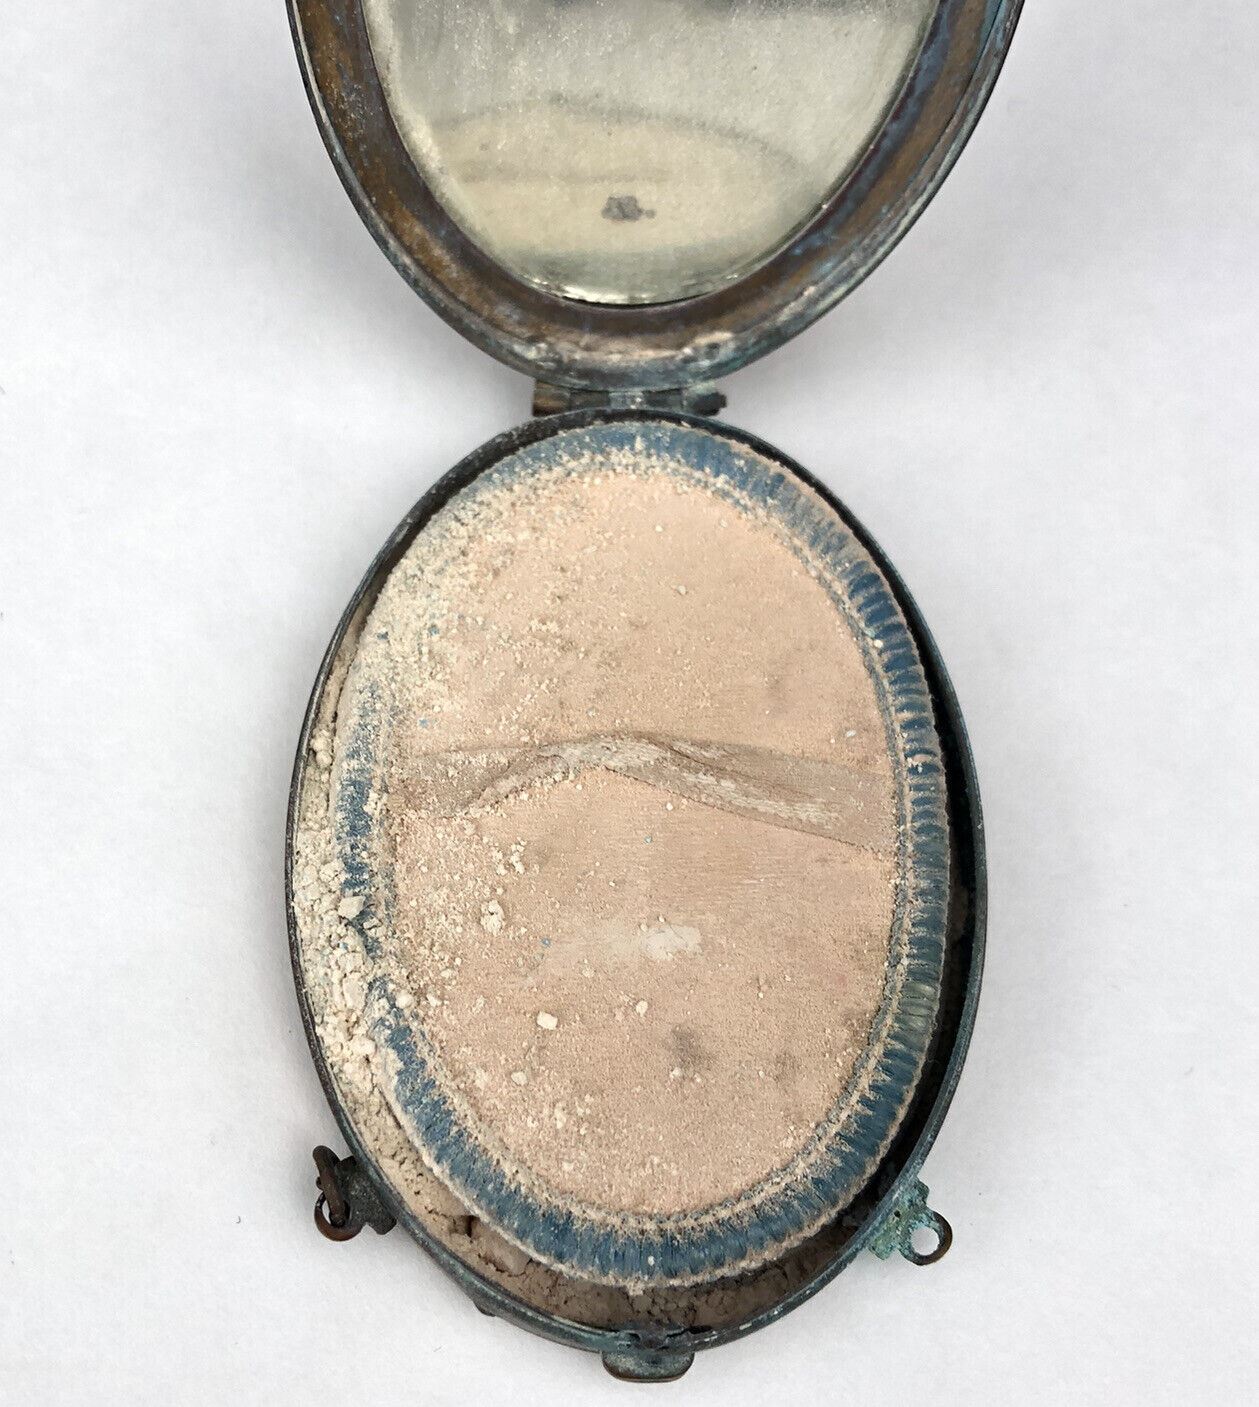 Antique Philadelphia Sesquicentennial 1926 Powder Compact Cosmetic Makeup Case